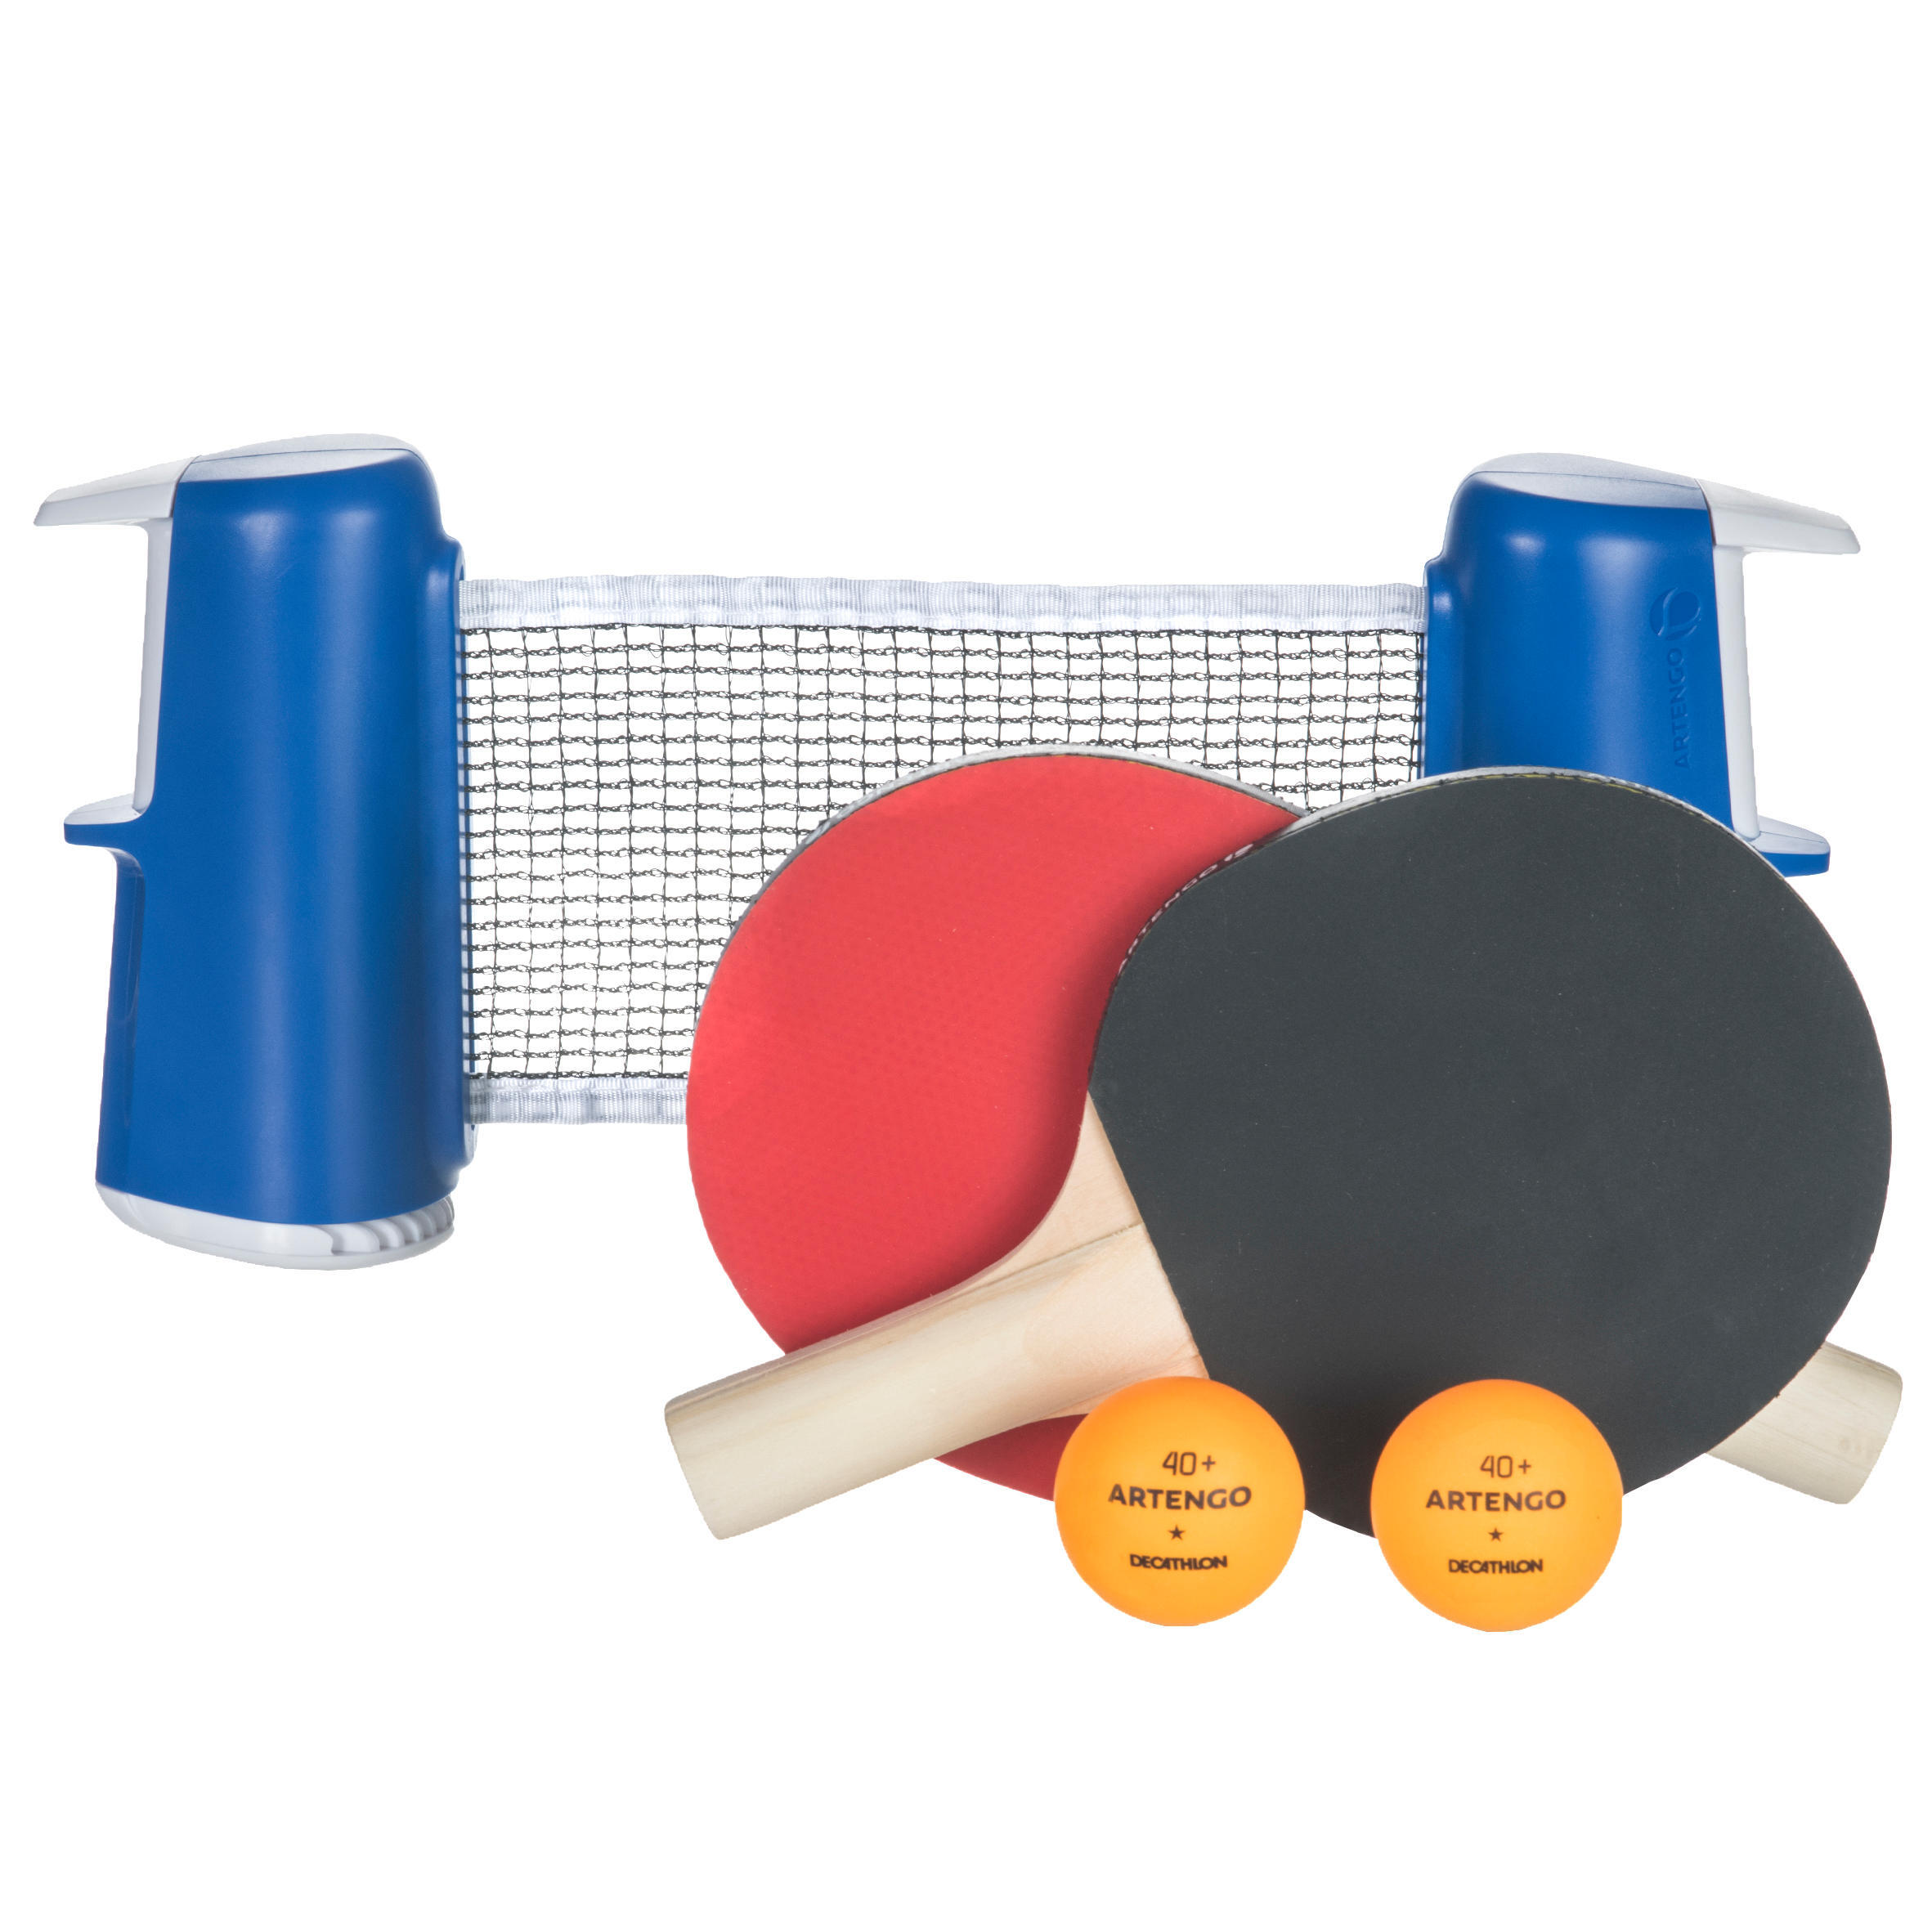 Набор для настольного тенниса Rollnet Small + 2 ракетки + 2 мяча PONGORI набор для настольного тенниса 2 ракетки level 100 3 мяча club select